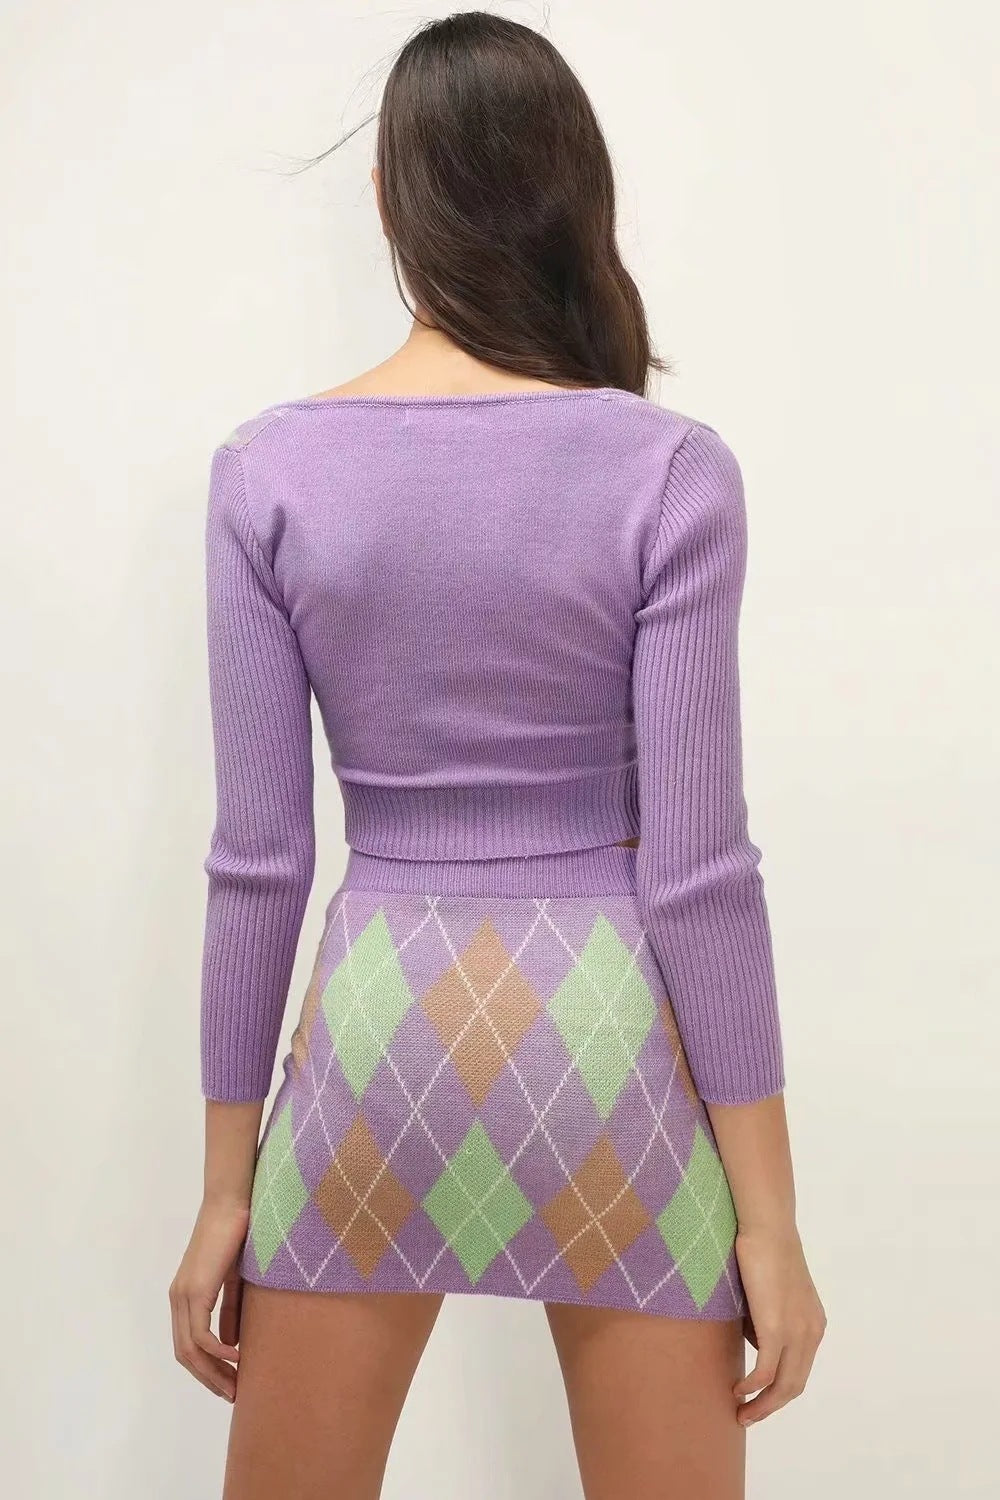 Elegant Midriff Baring Short Tops and Mini Knitting Skirts